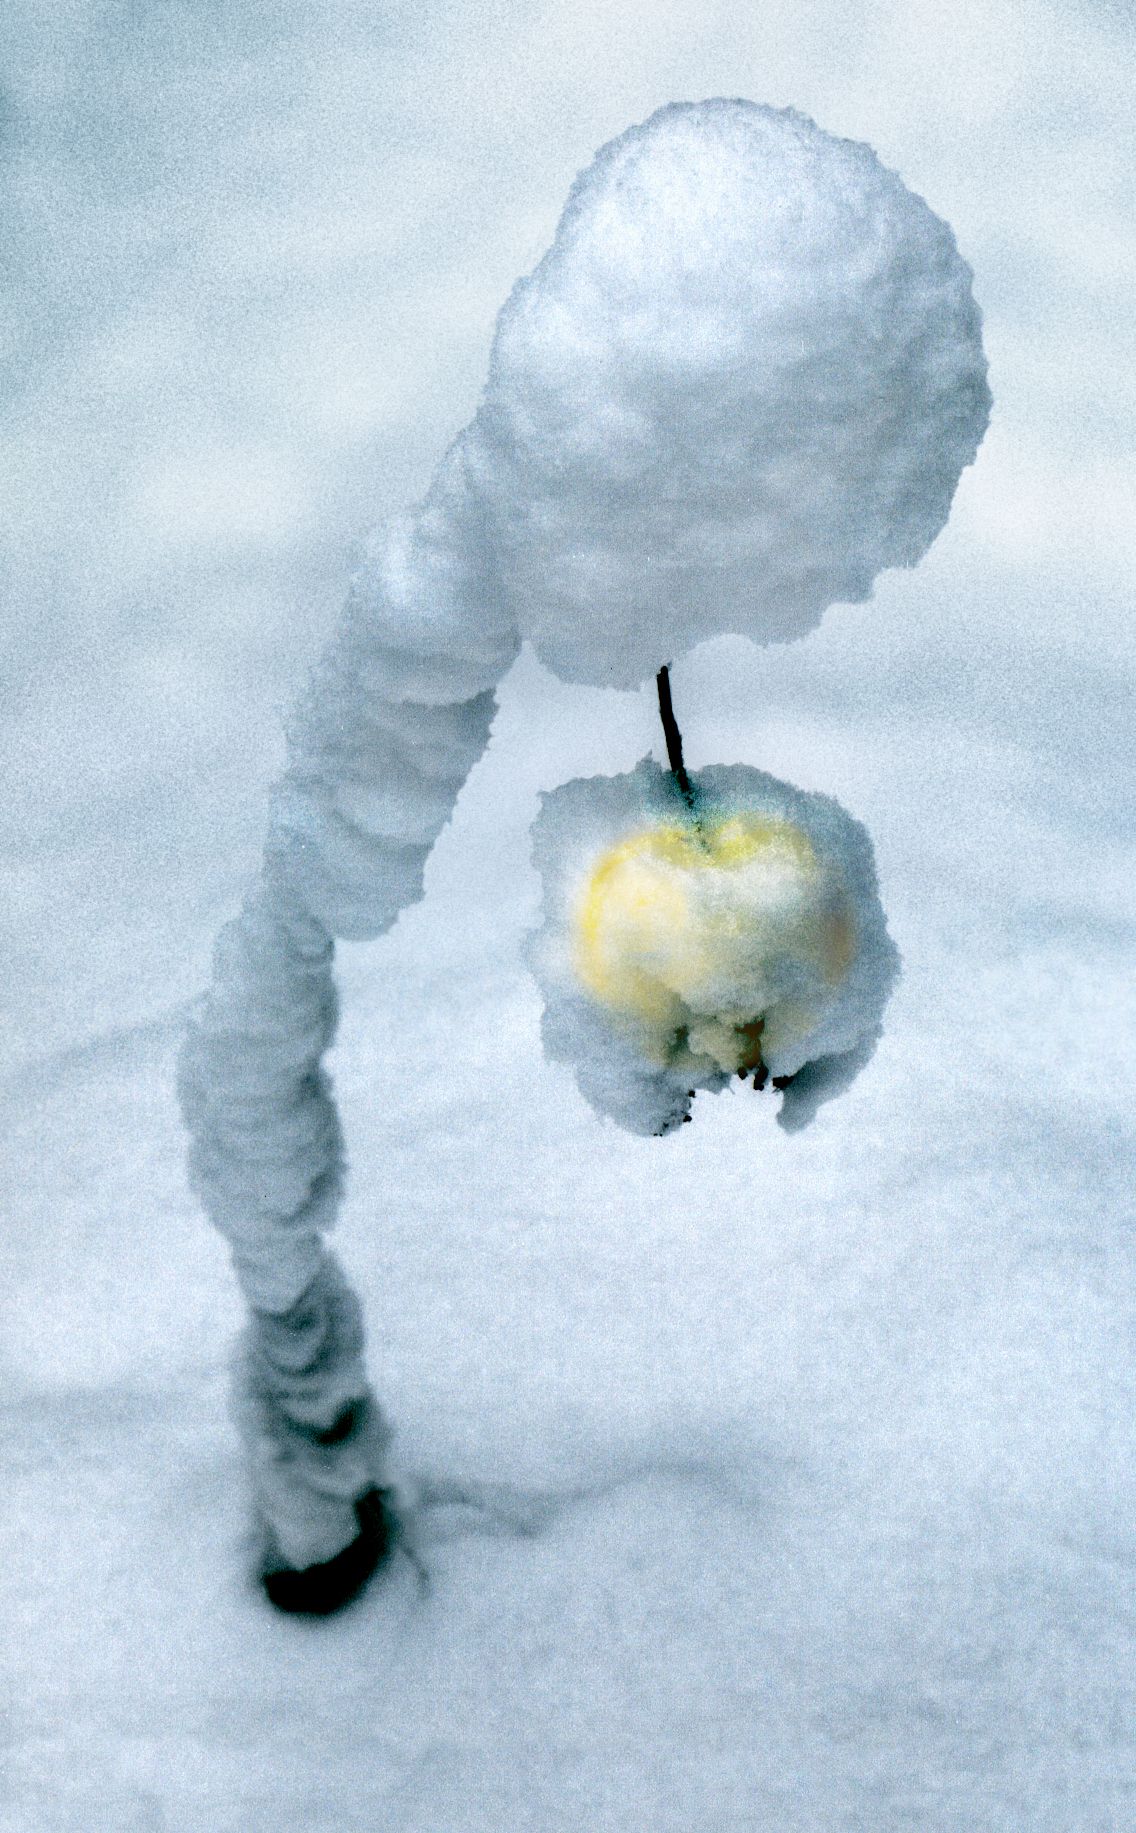 снег, мороз, обледенение, яблоко, плод, ожидание, голова, Светлана Холодняк